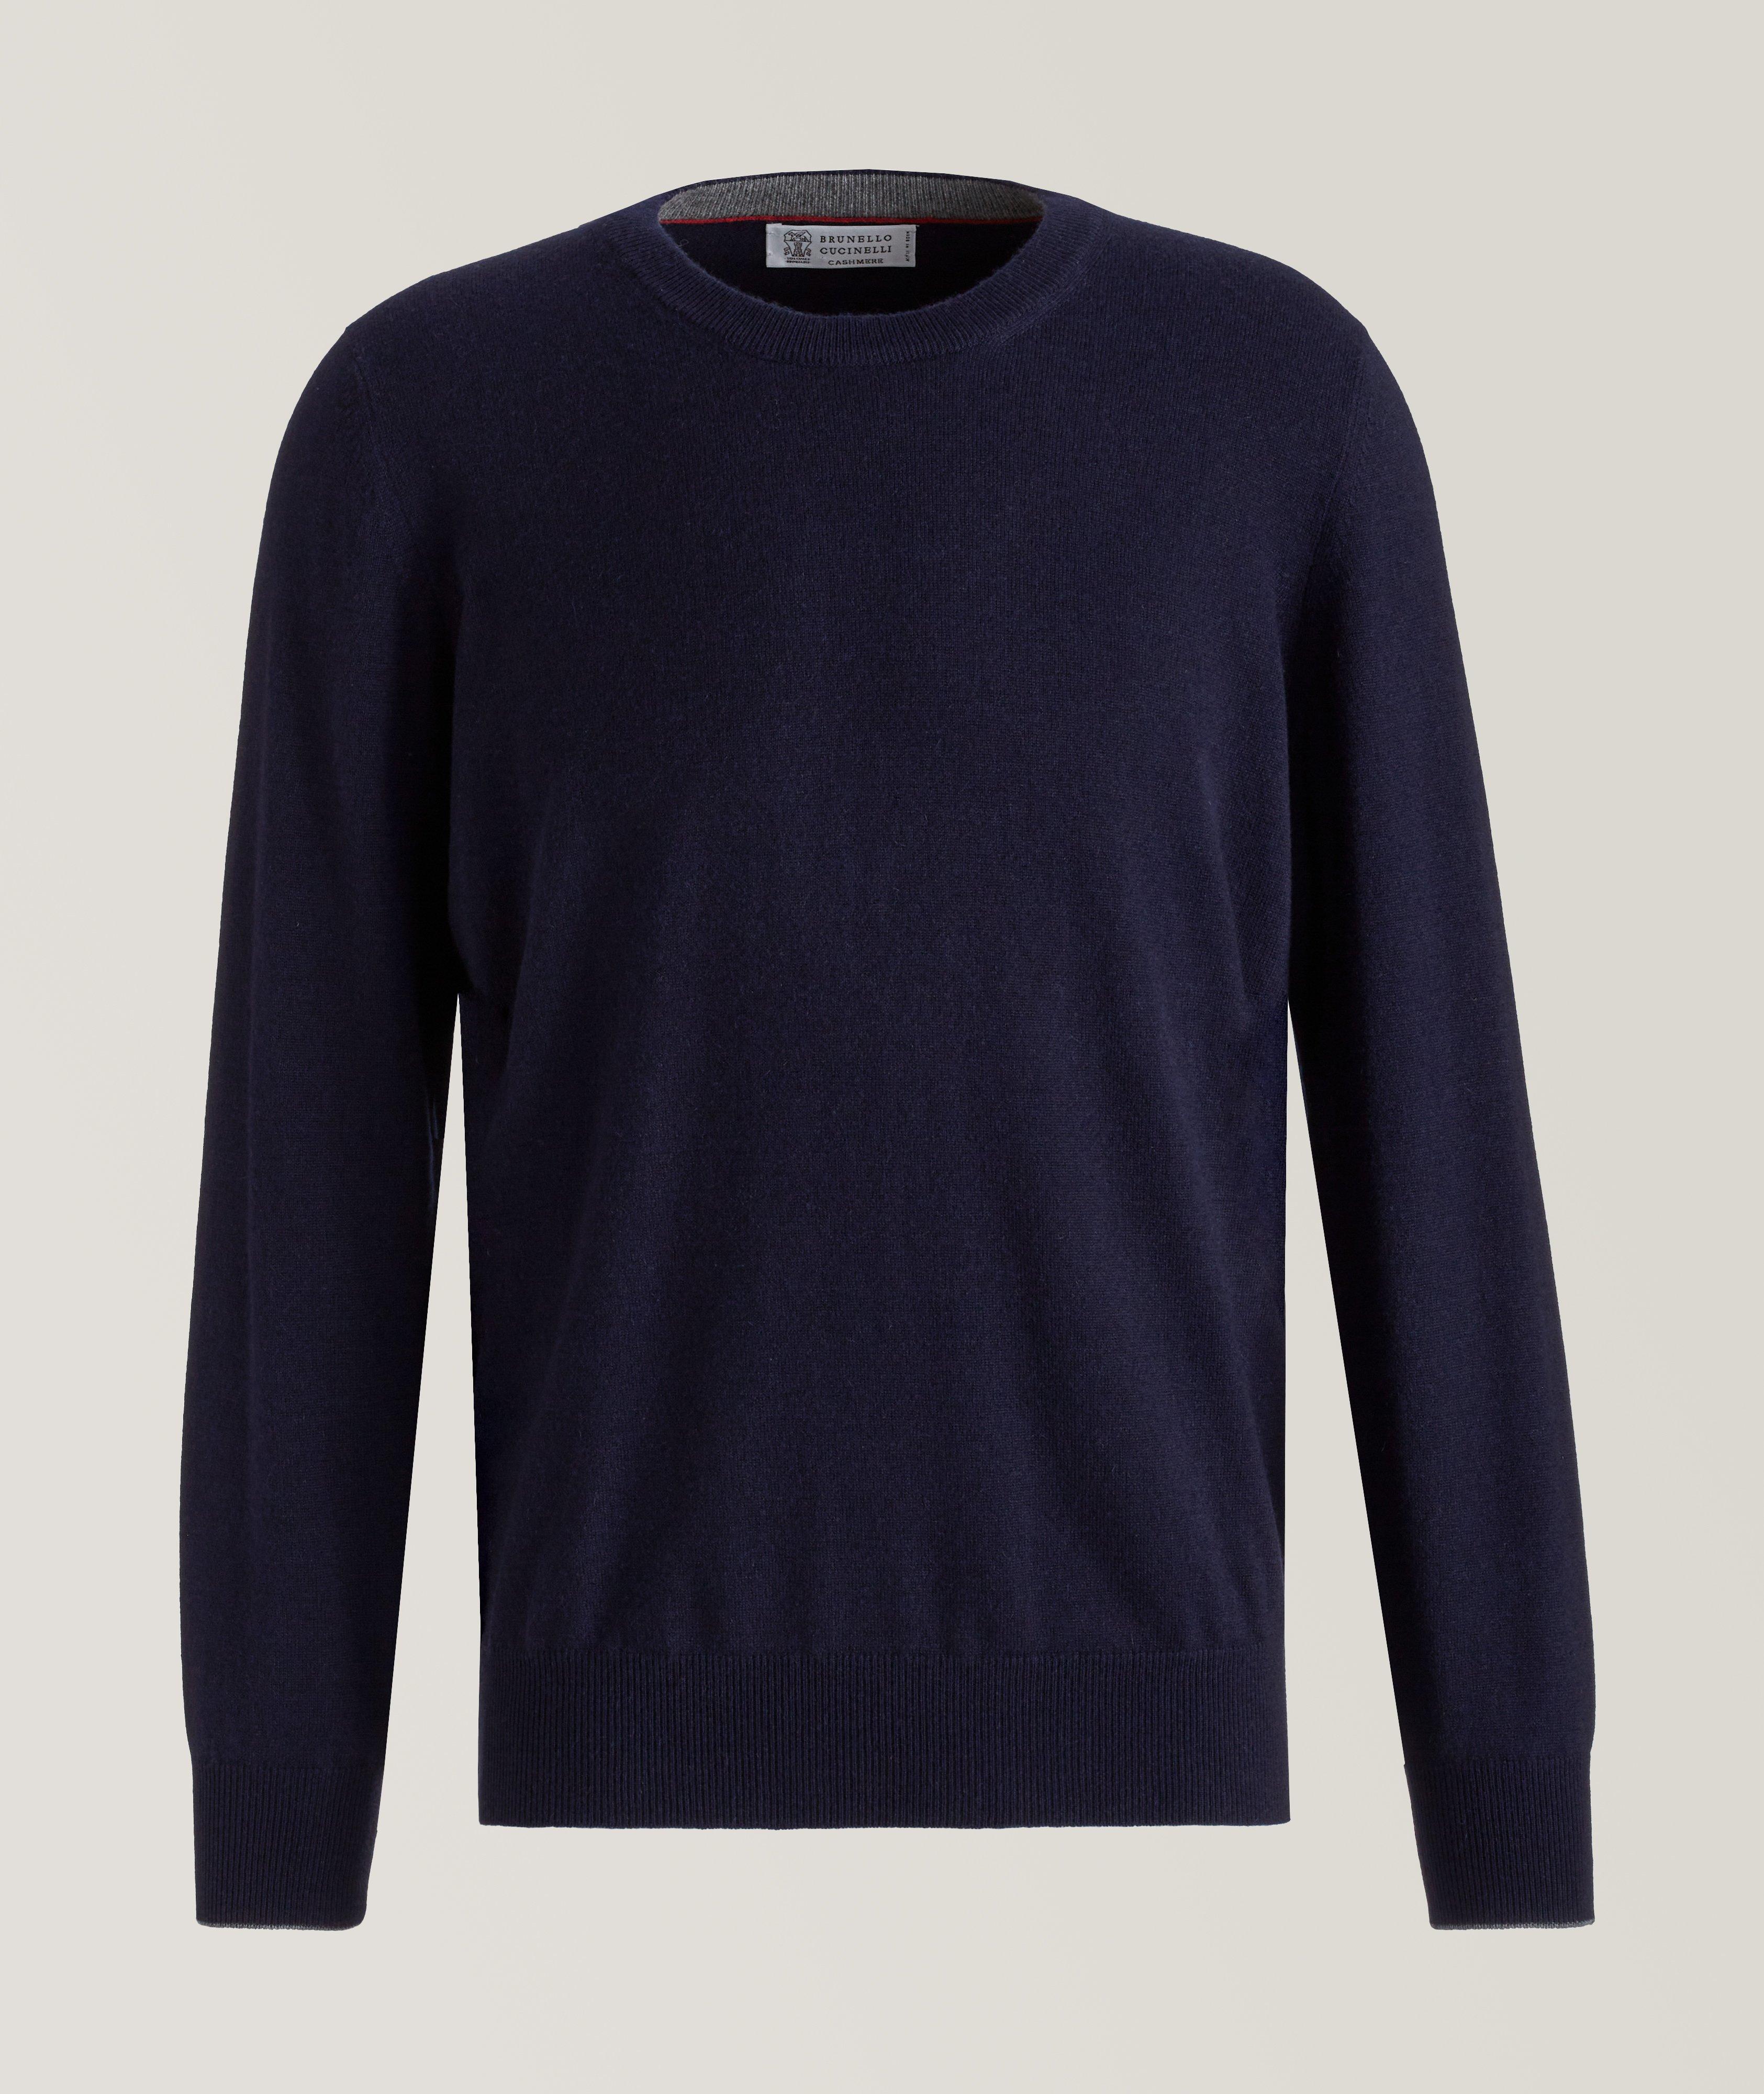 Harry Rosen Cashmere Crewneck Sweater. 1